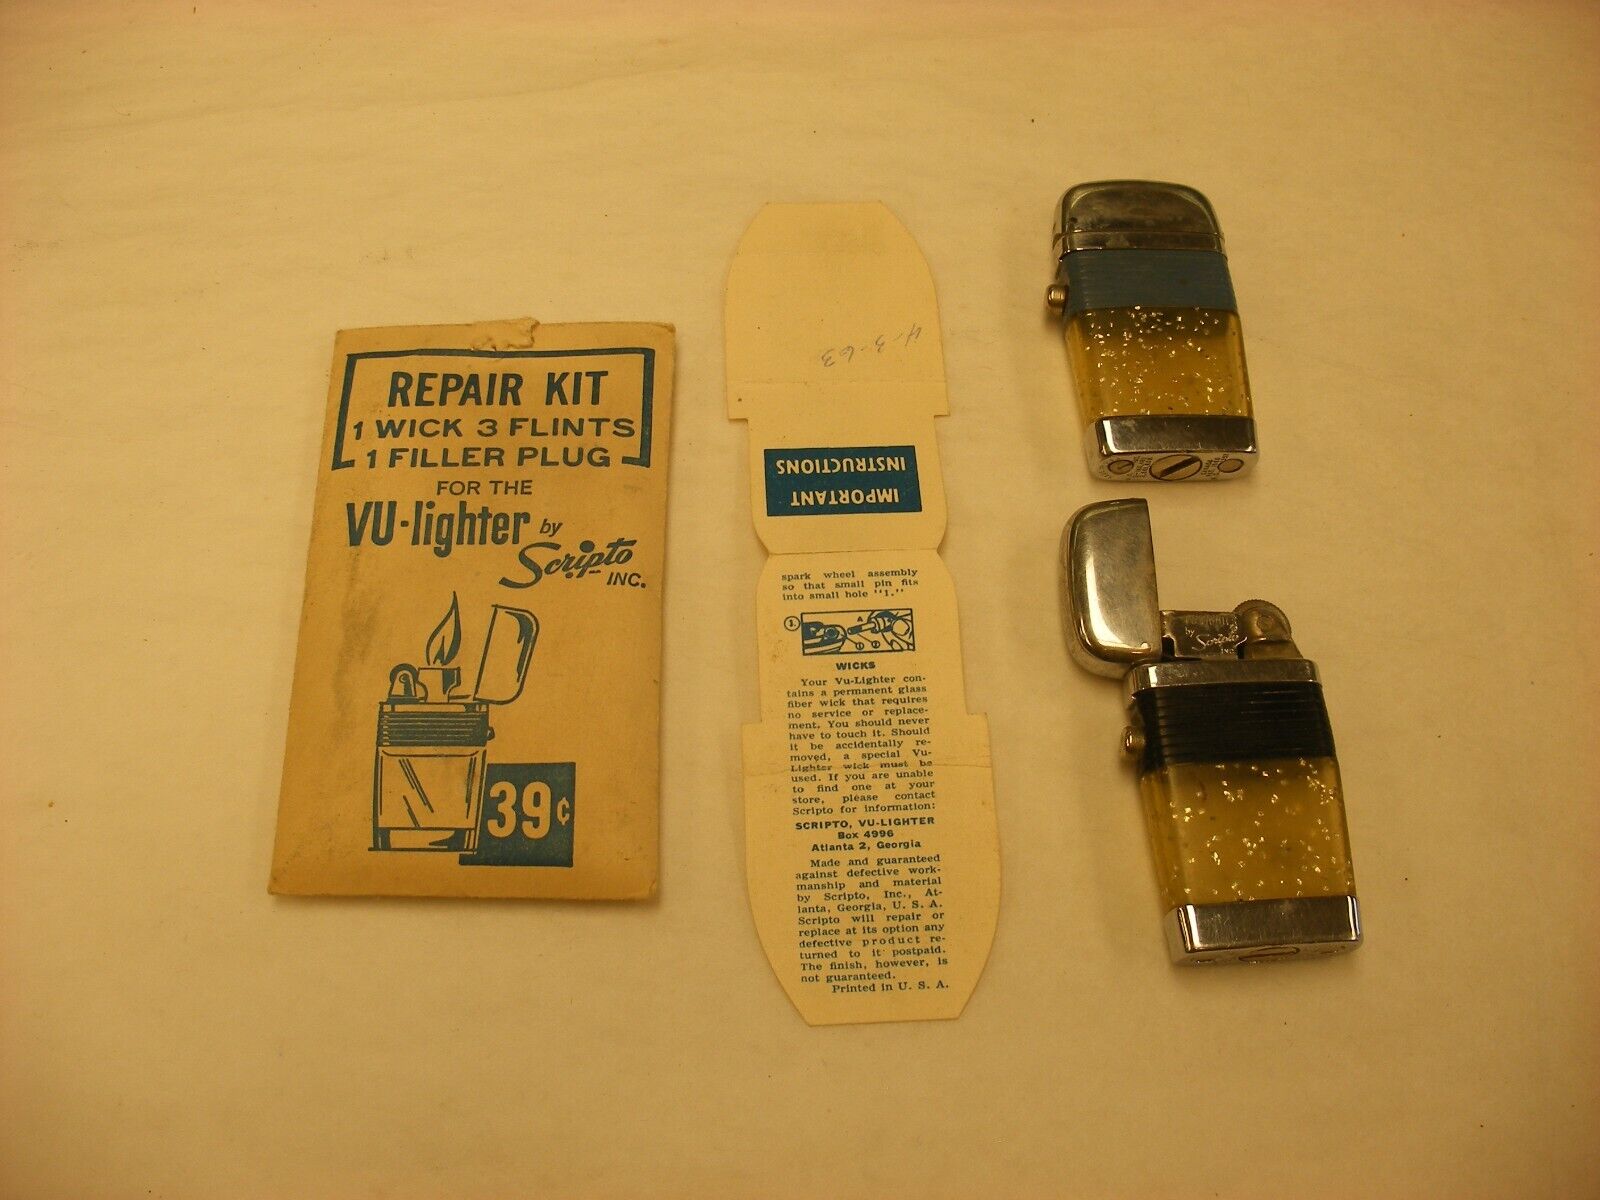 Vintage Vu-lighter By Scripto Lighter Lot Of 2 & Repair Kit - Untested